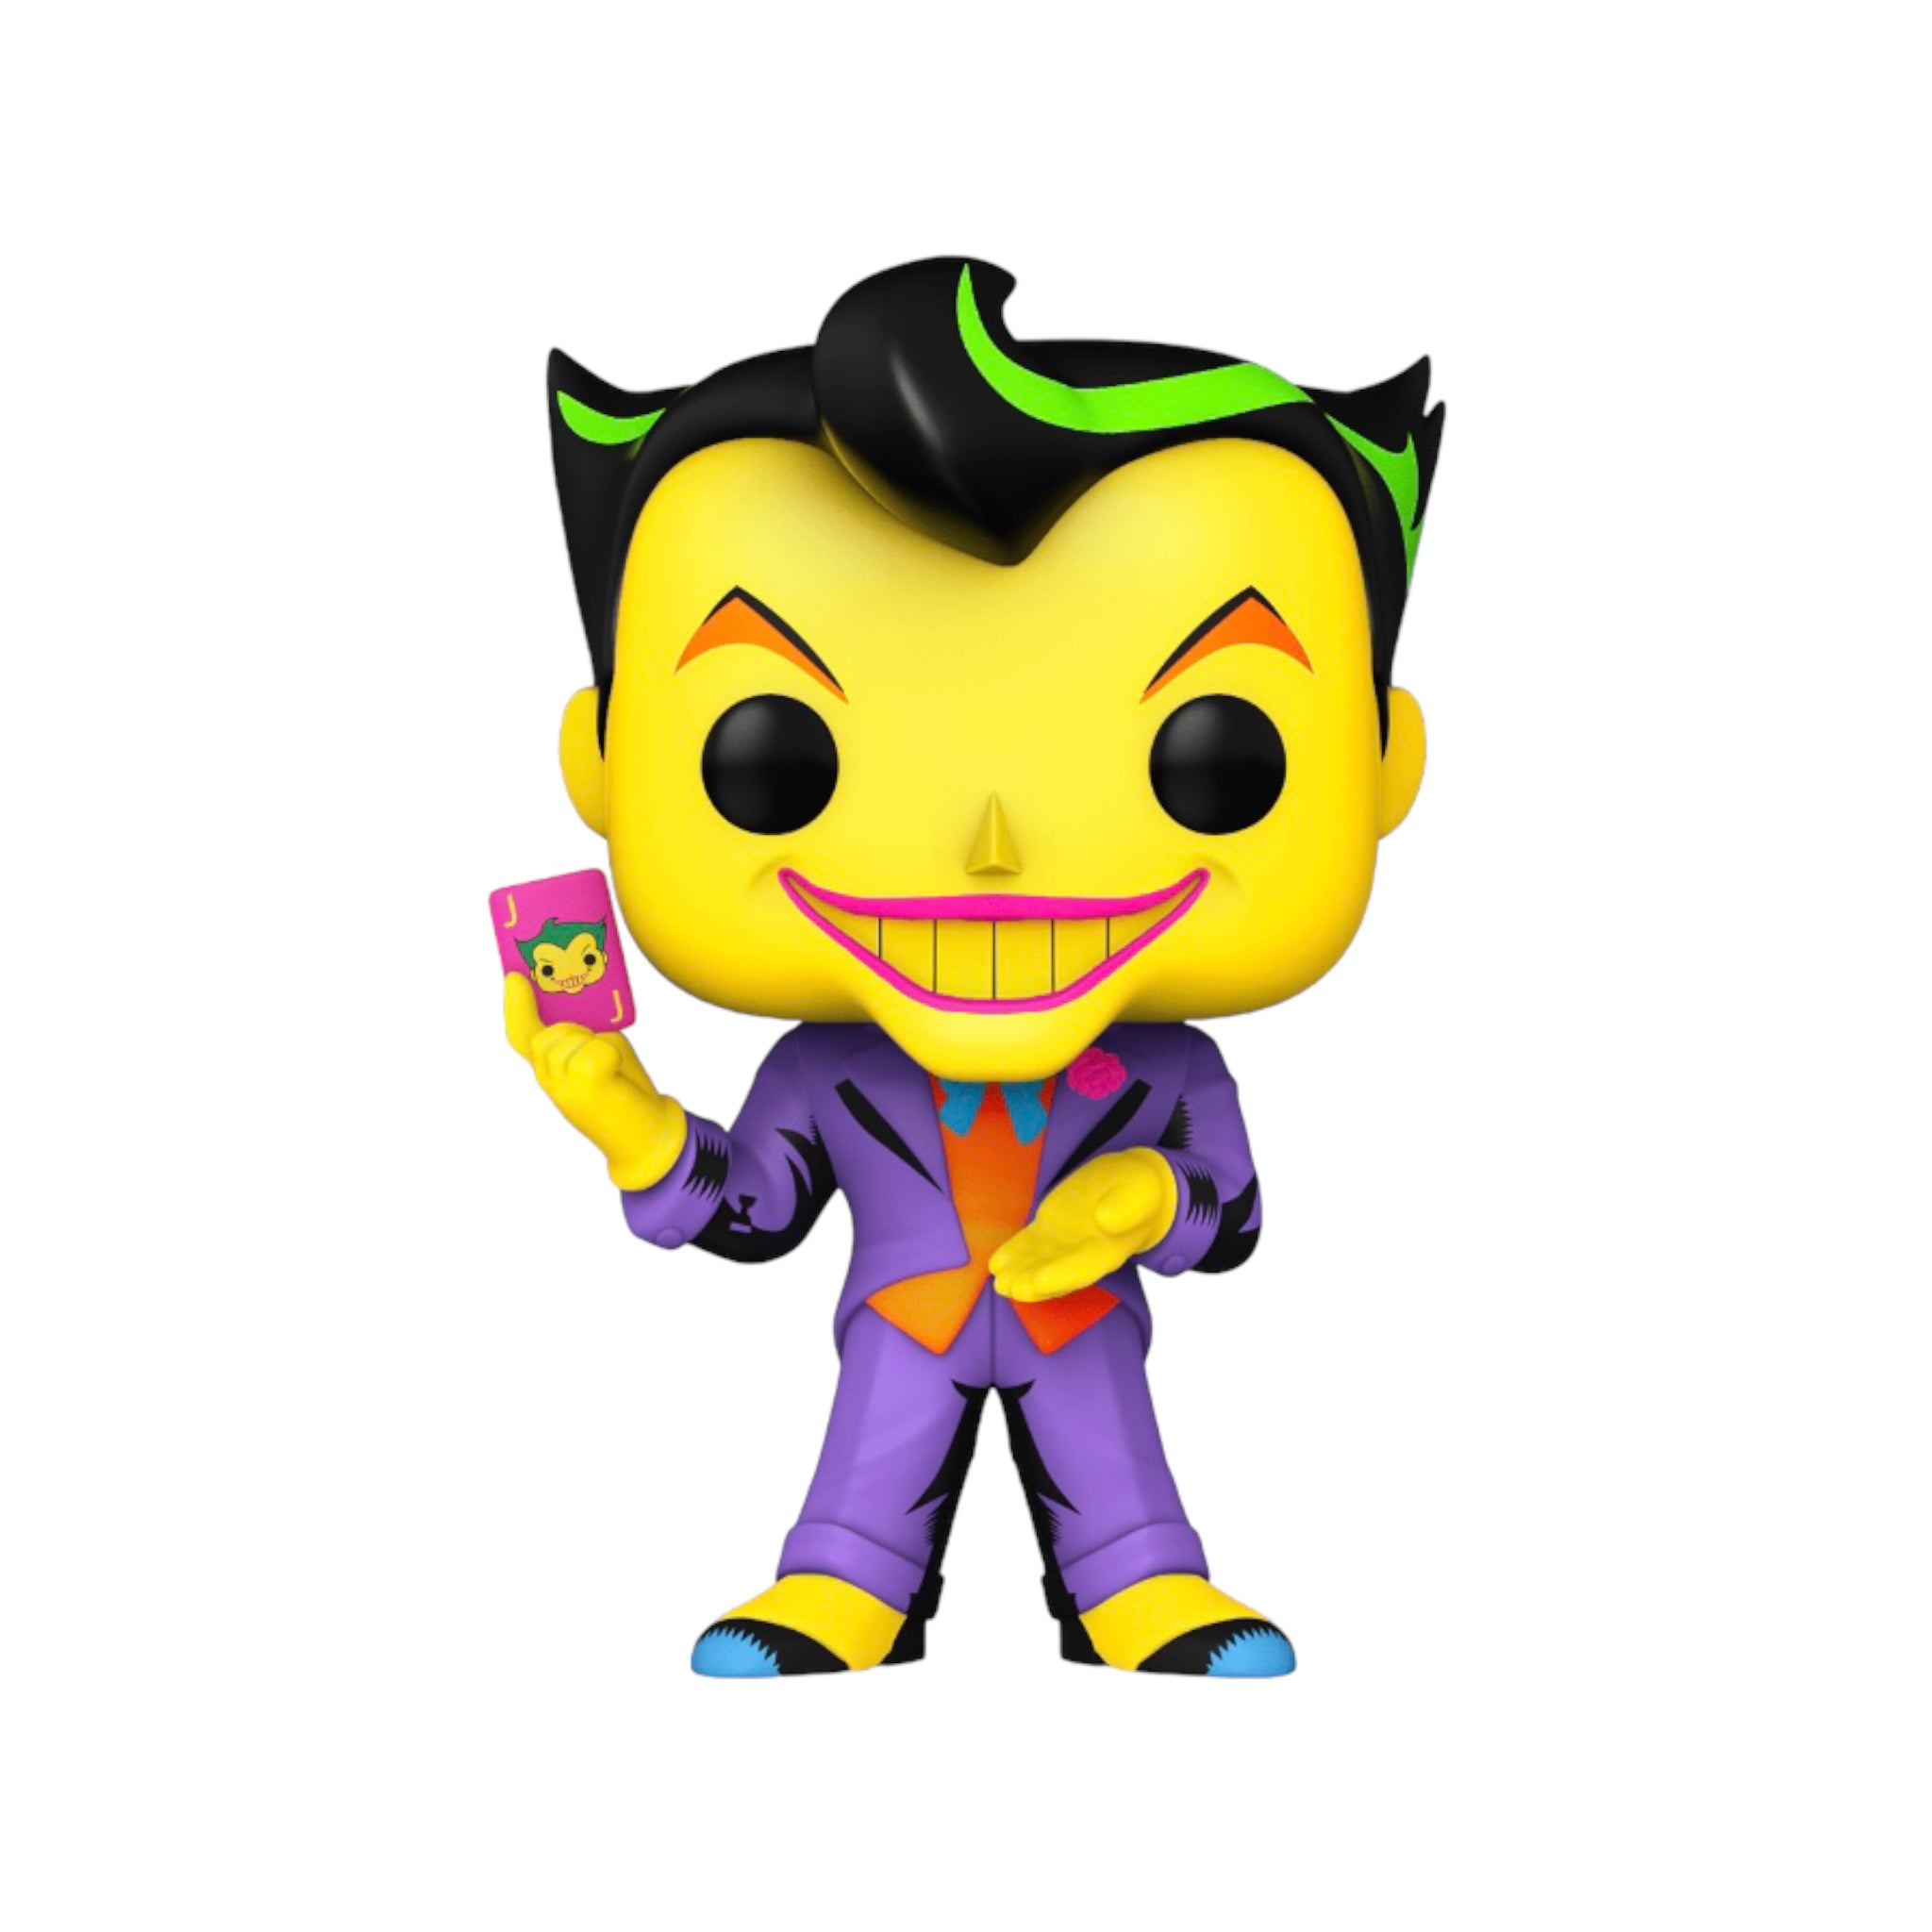 The Joker #370 (Black Light) Funko Pop! - Batman: The Animated Series - Special Edition